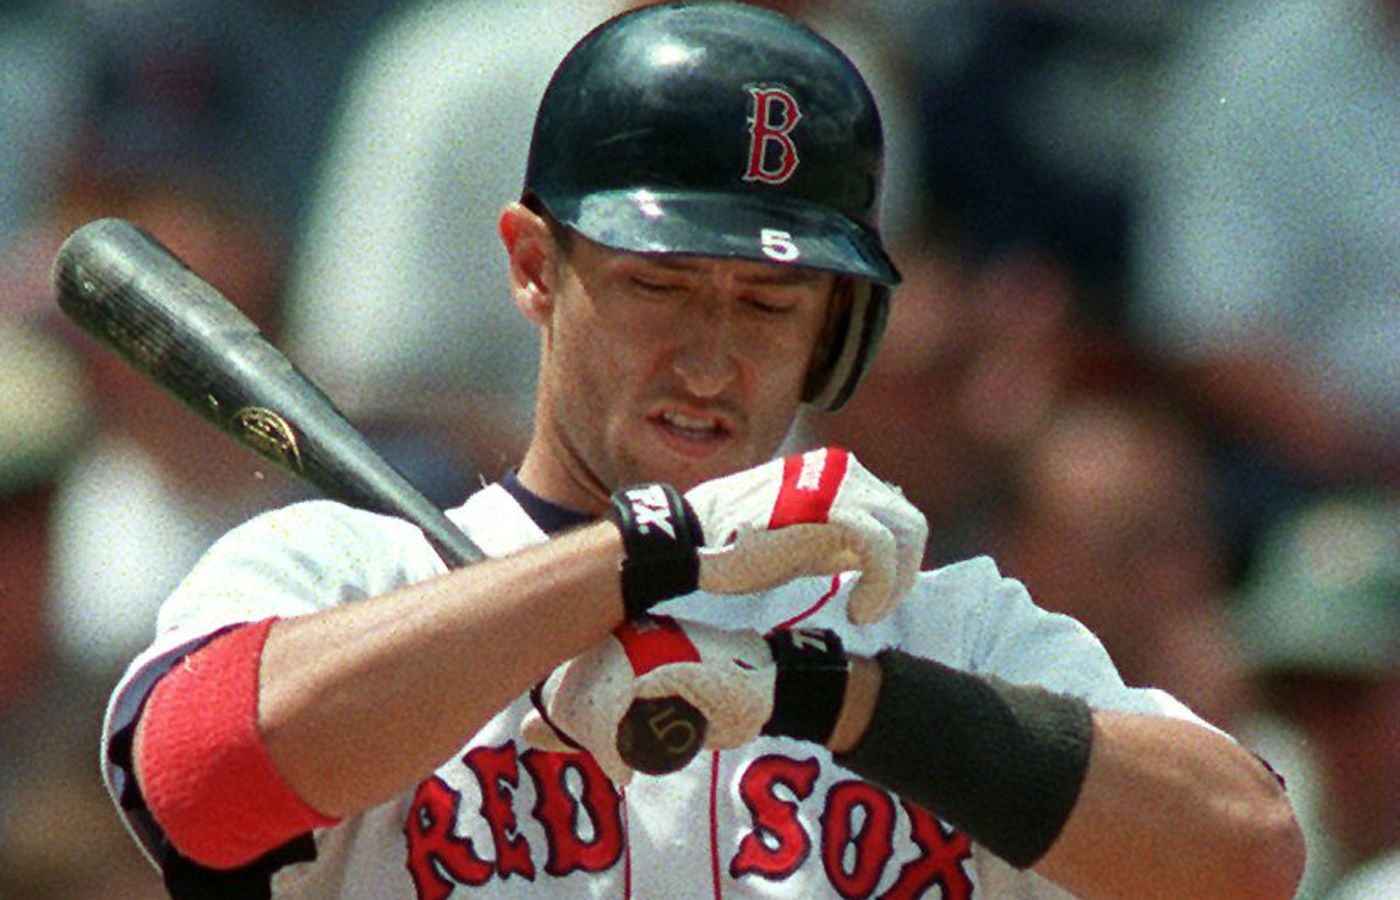 Red Sox Debate: Boston's Nomar Garciaparra vs New York's Derek Jeter